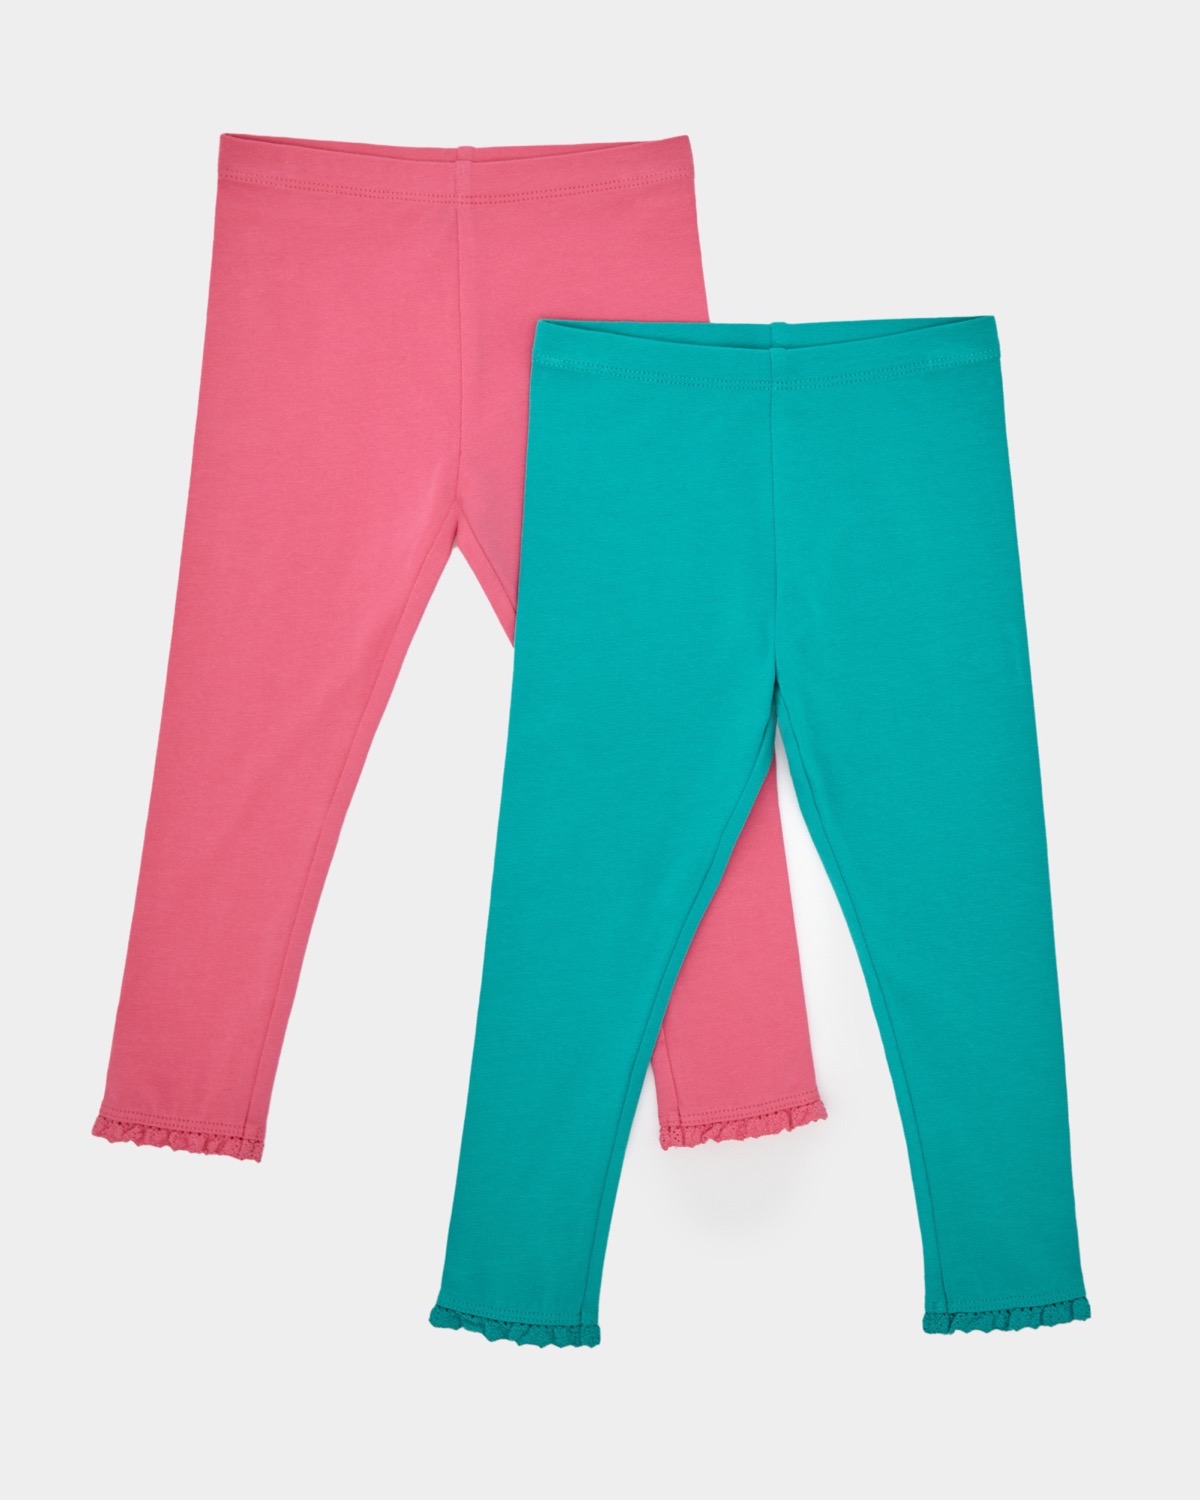 Girls Children Cotton Safety Pants Underwear Lace Stretch Leggings Short  Panties | eBay